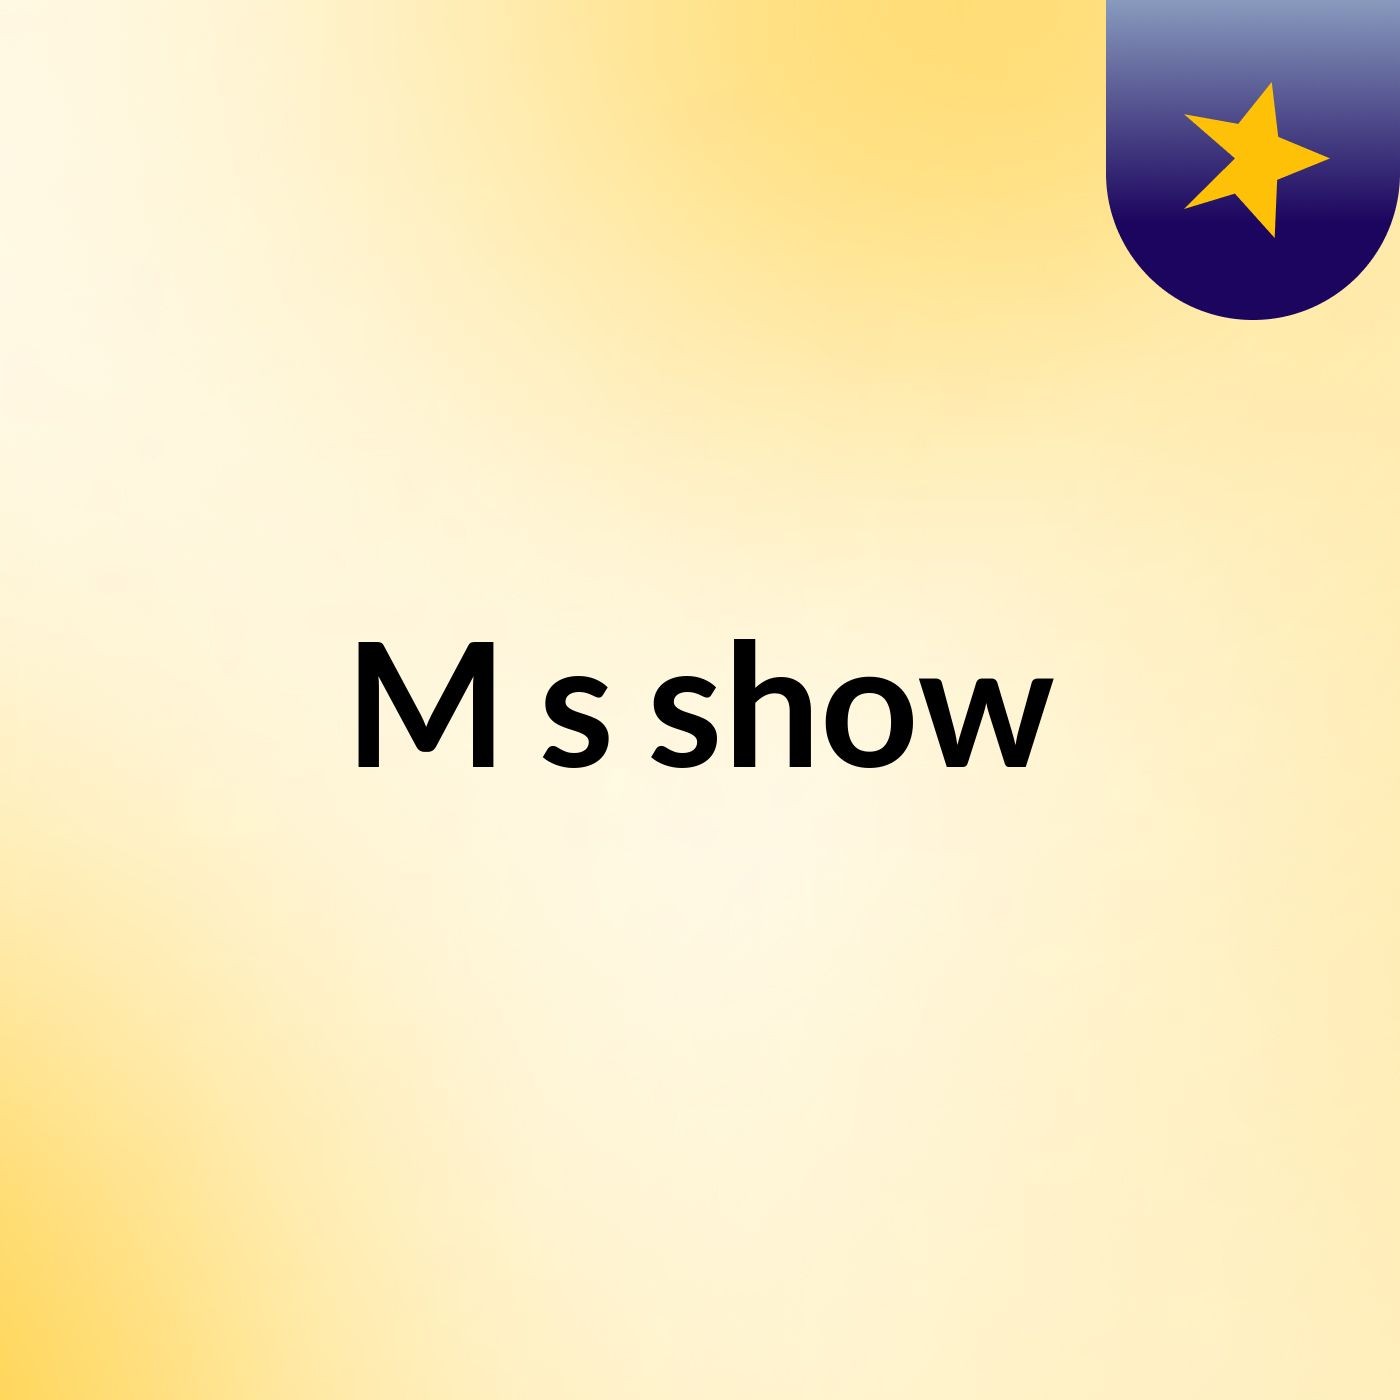 M's show